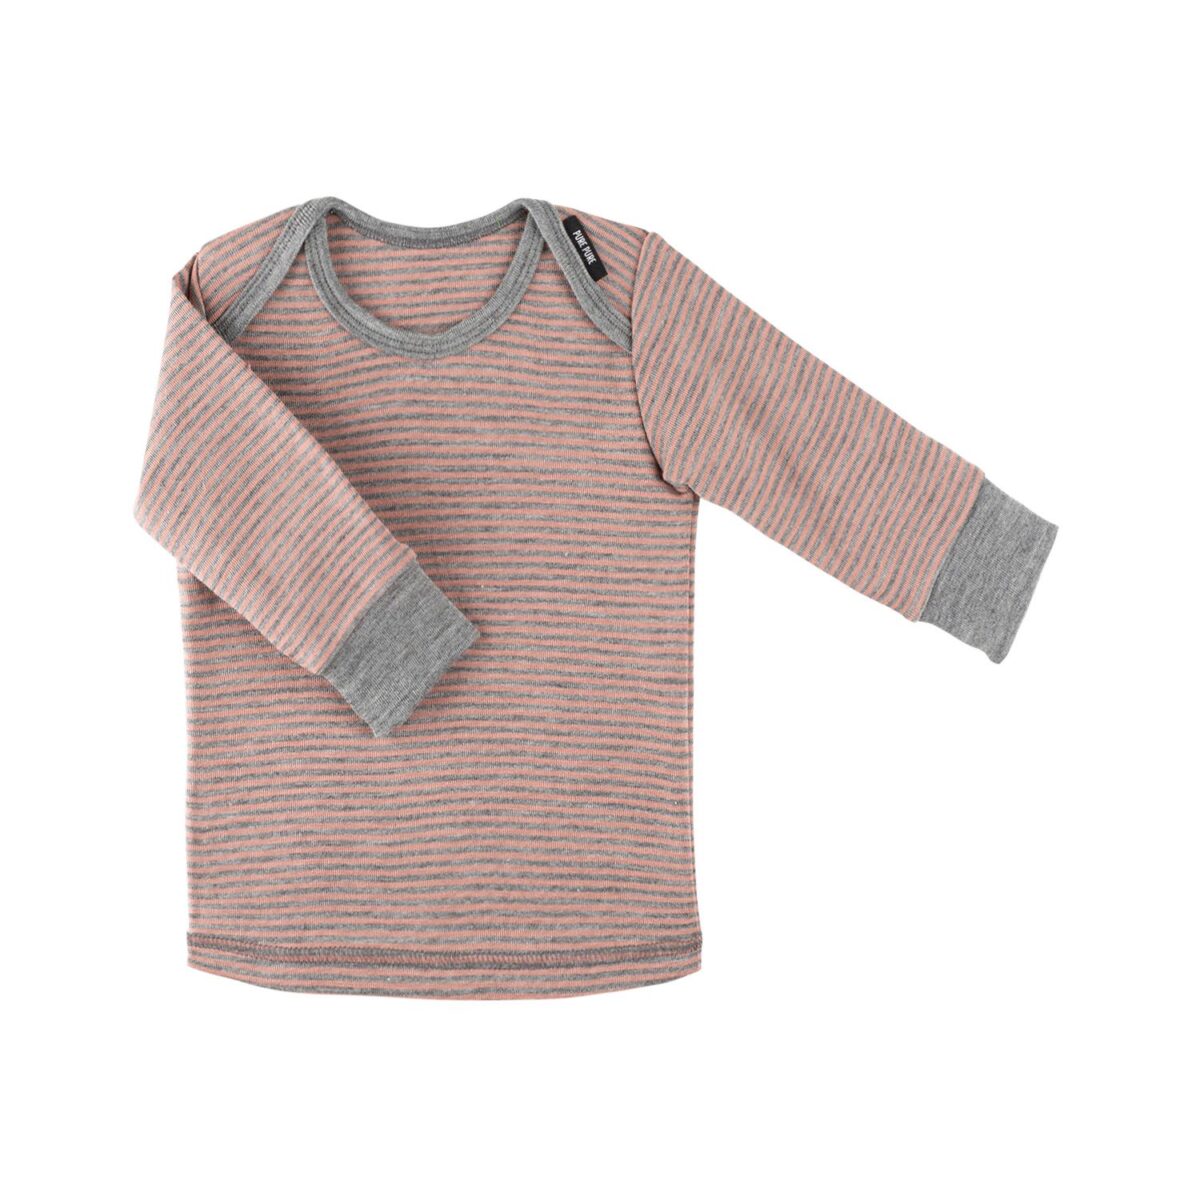 PurePure Shirt langarm grau-rose misty - Familienbande